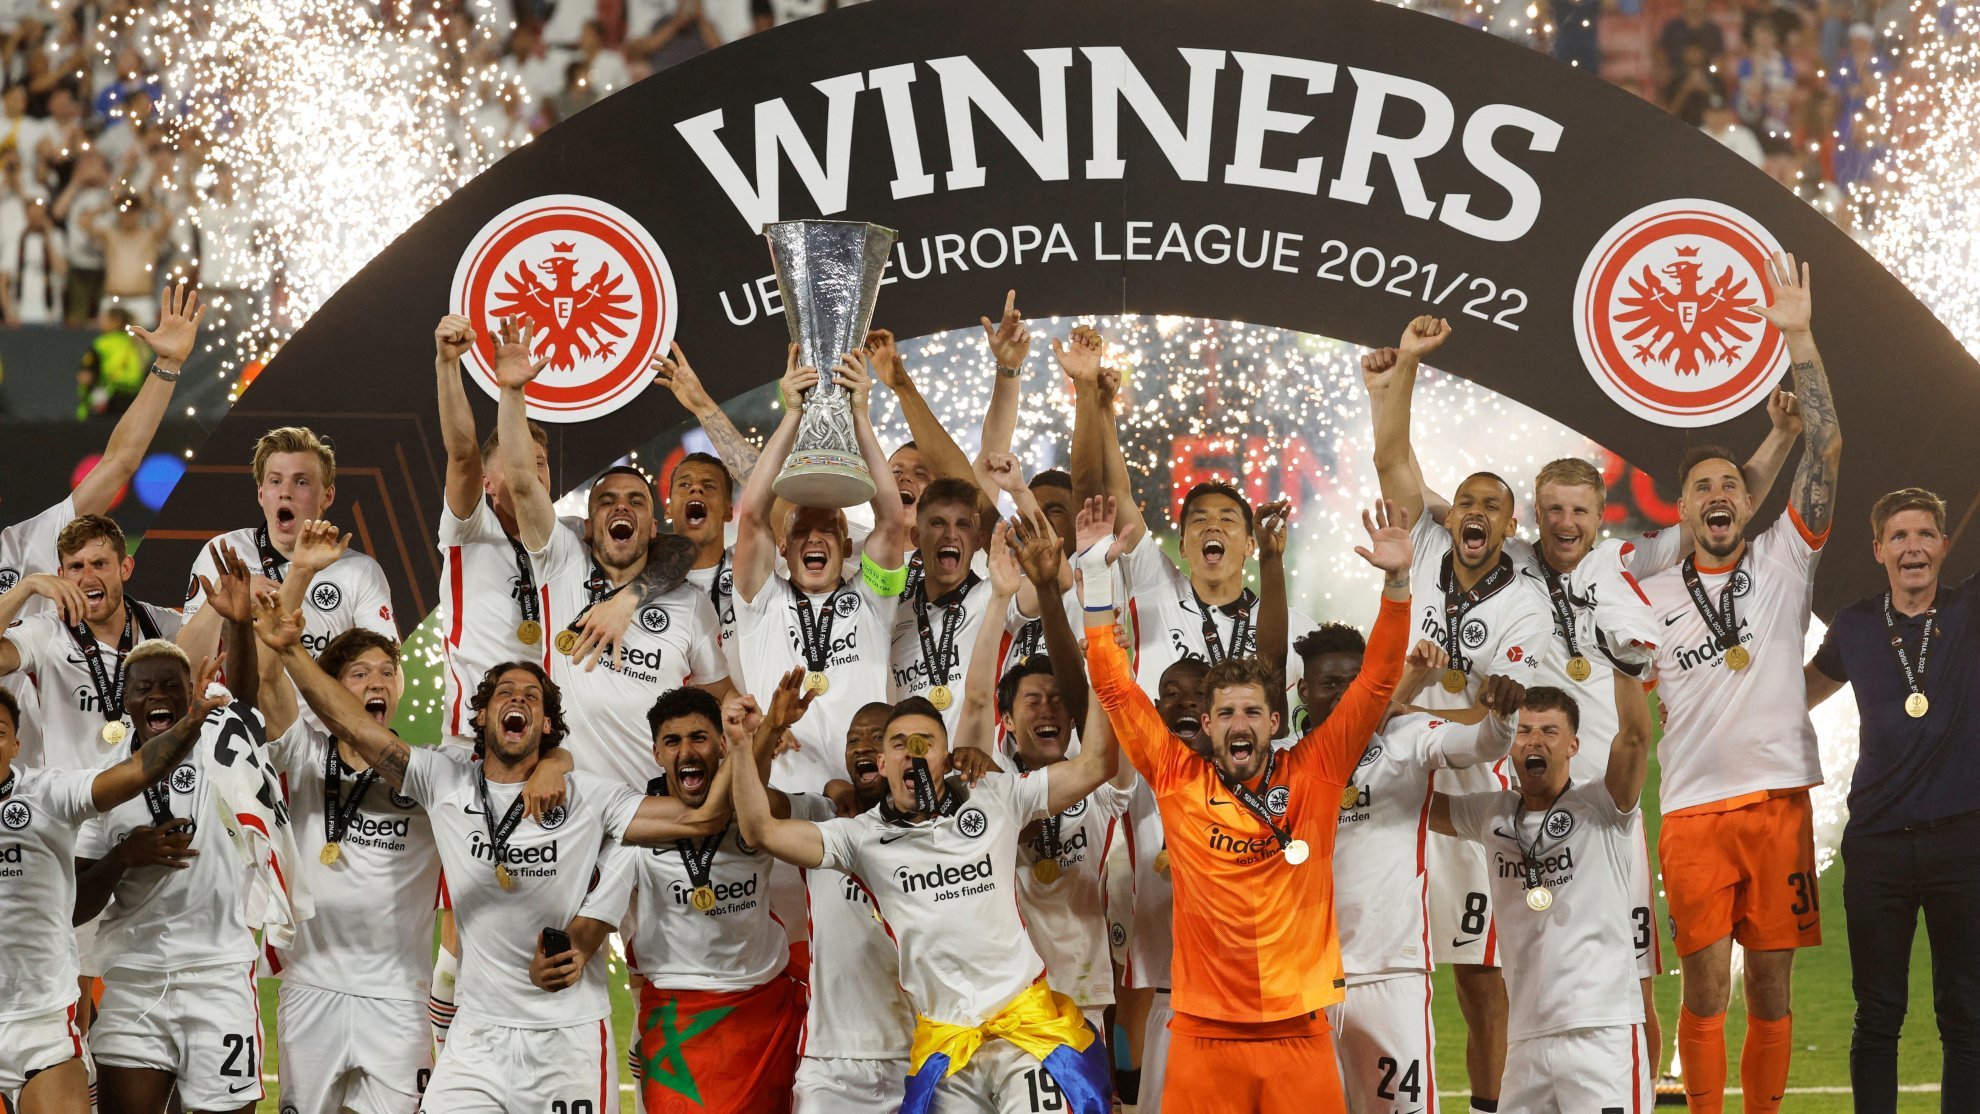 eintracht frankfurt espera al ganador de la champions league: real madrid o liverpool